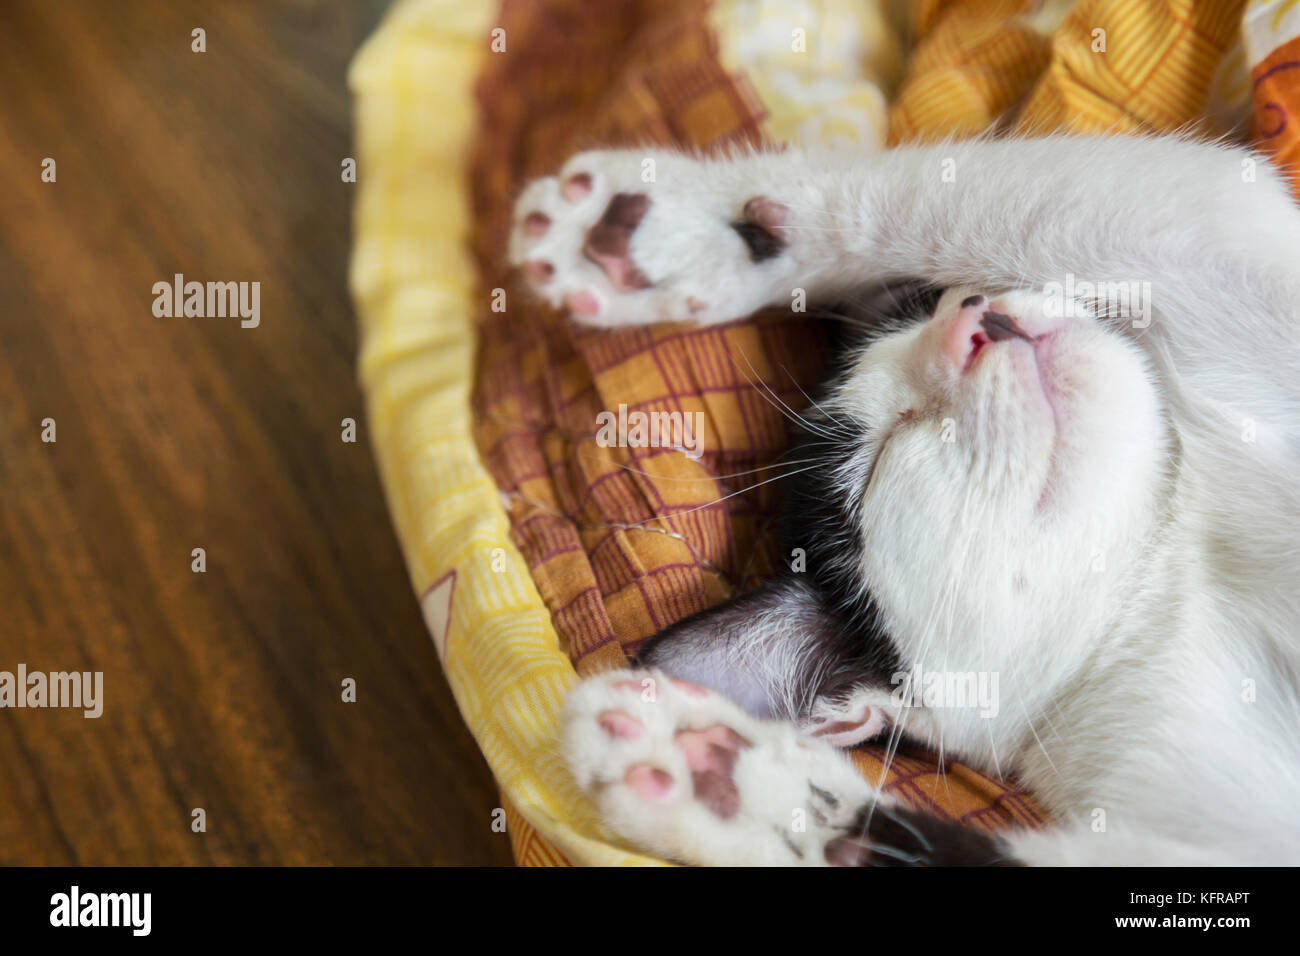 cat sleeping in the blanket, selective focus Stock Photo